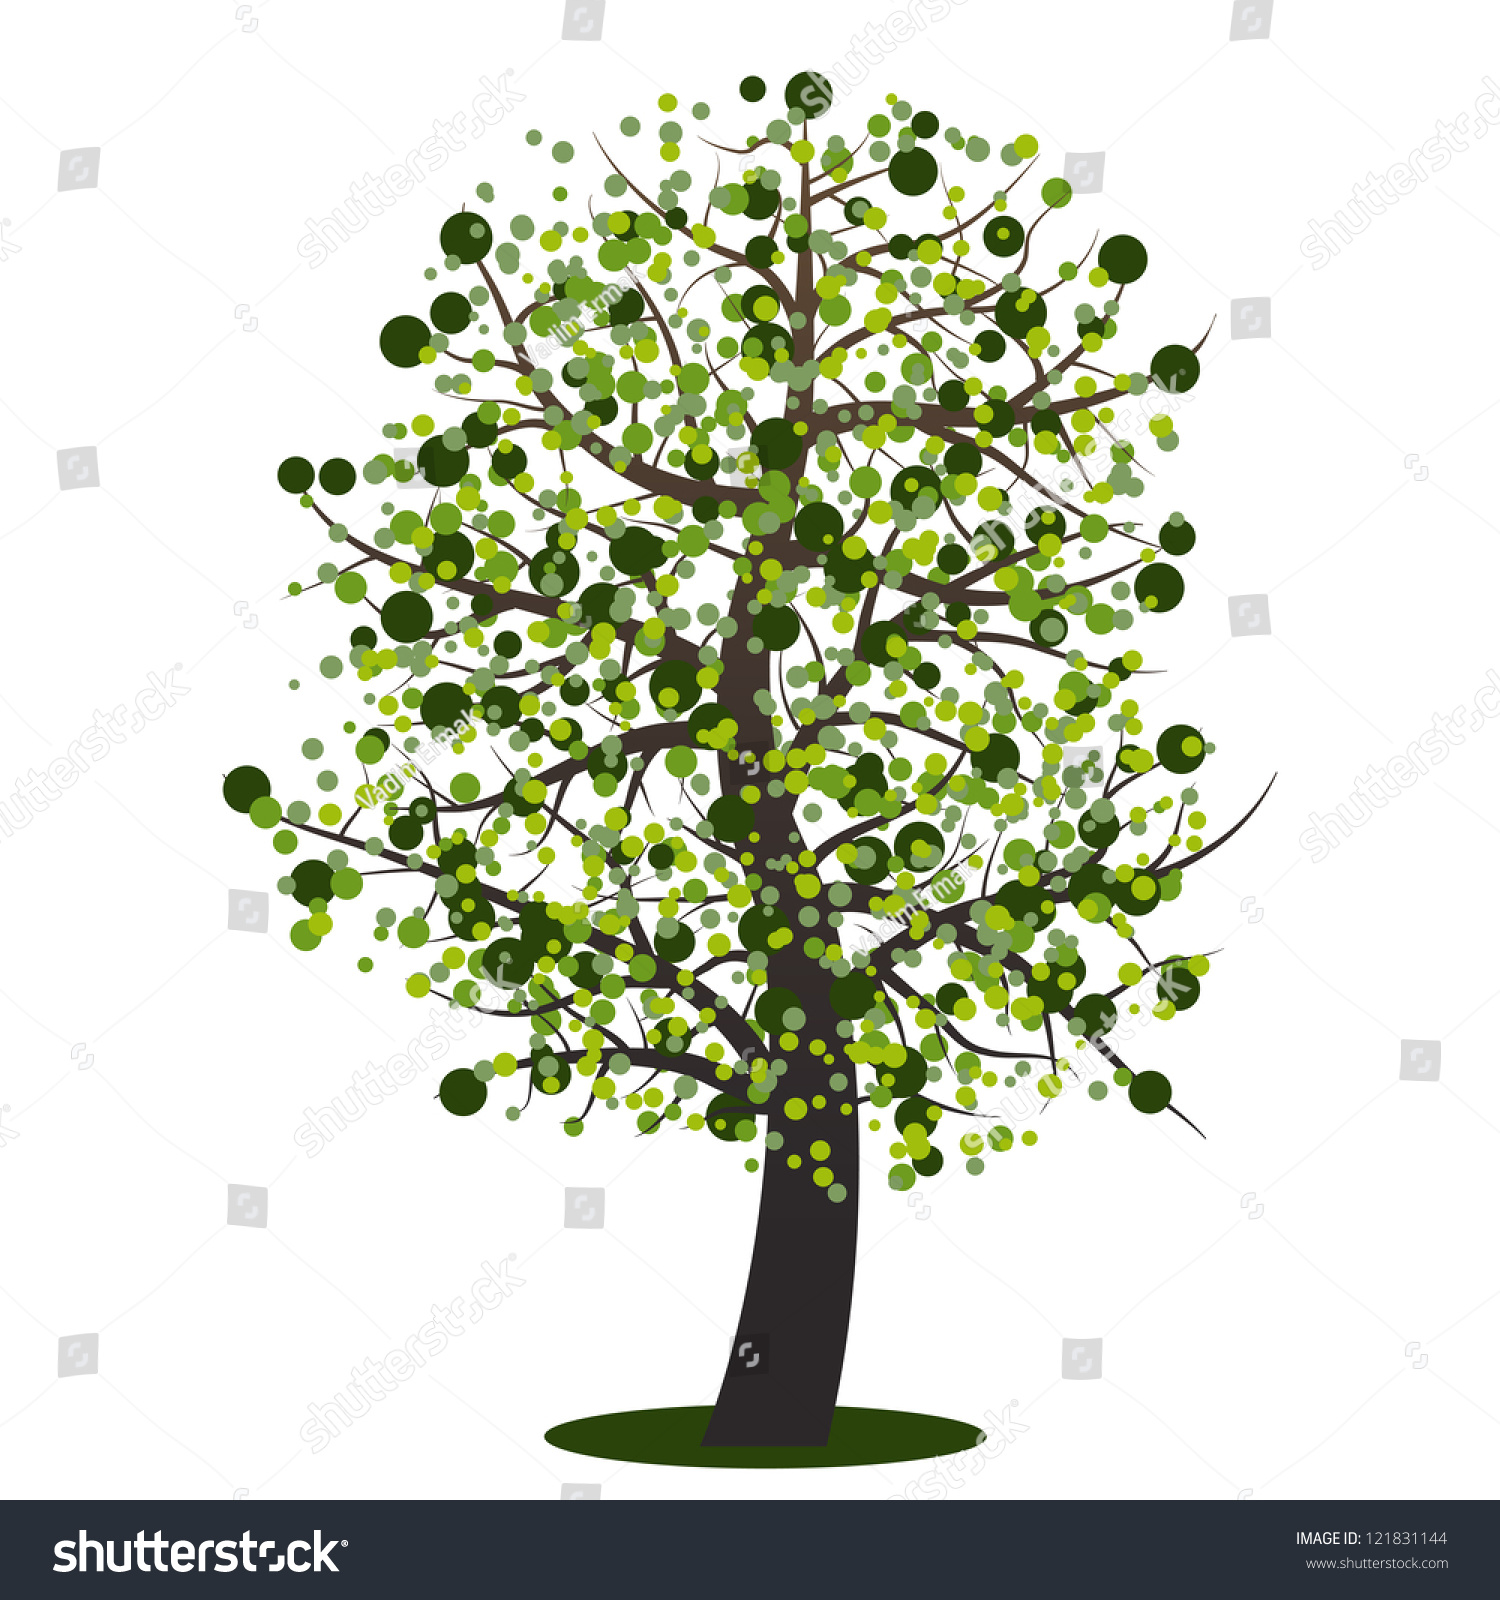 Edit Vectors Free Online - Abstract tree | Shutterstock Editor